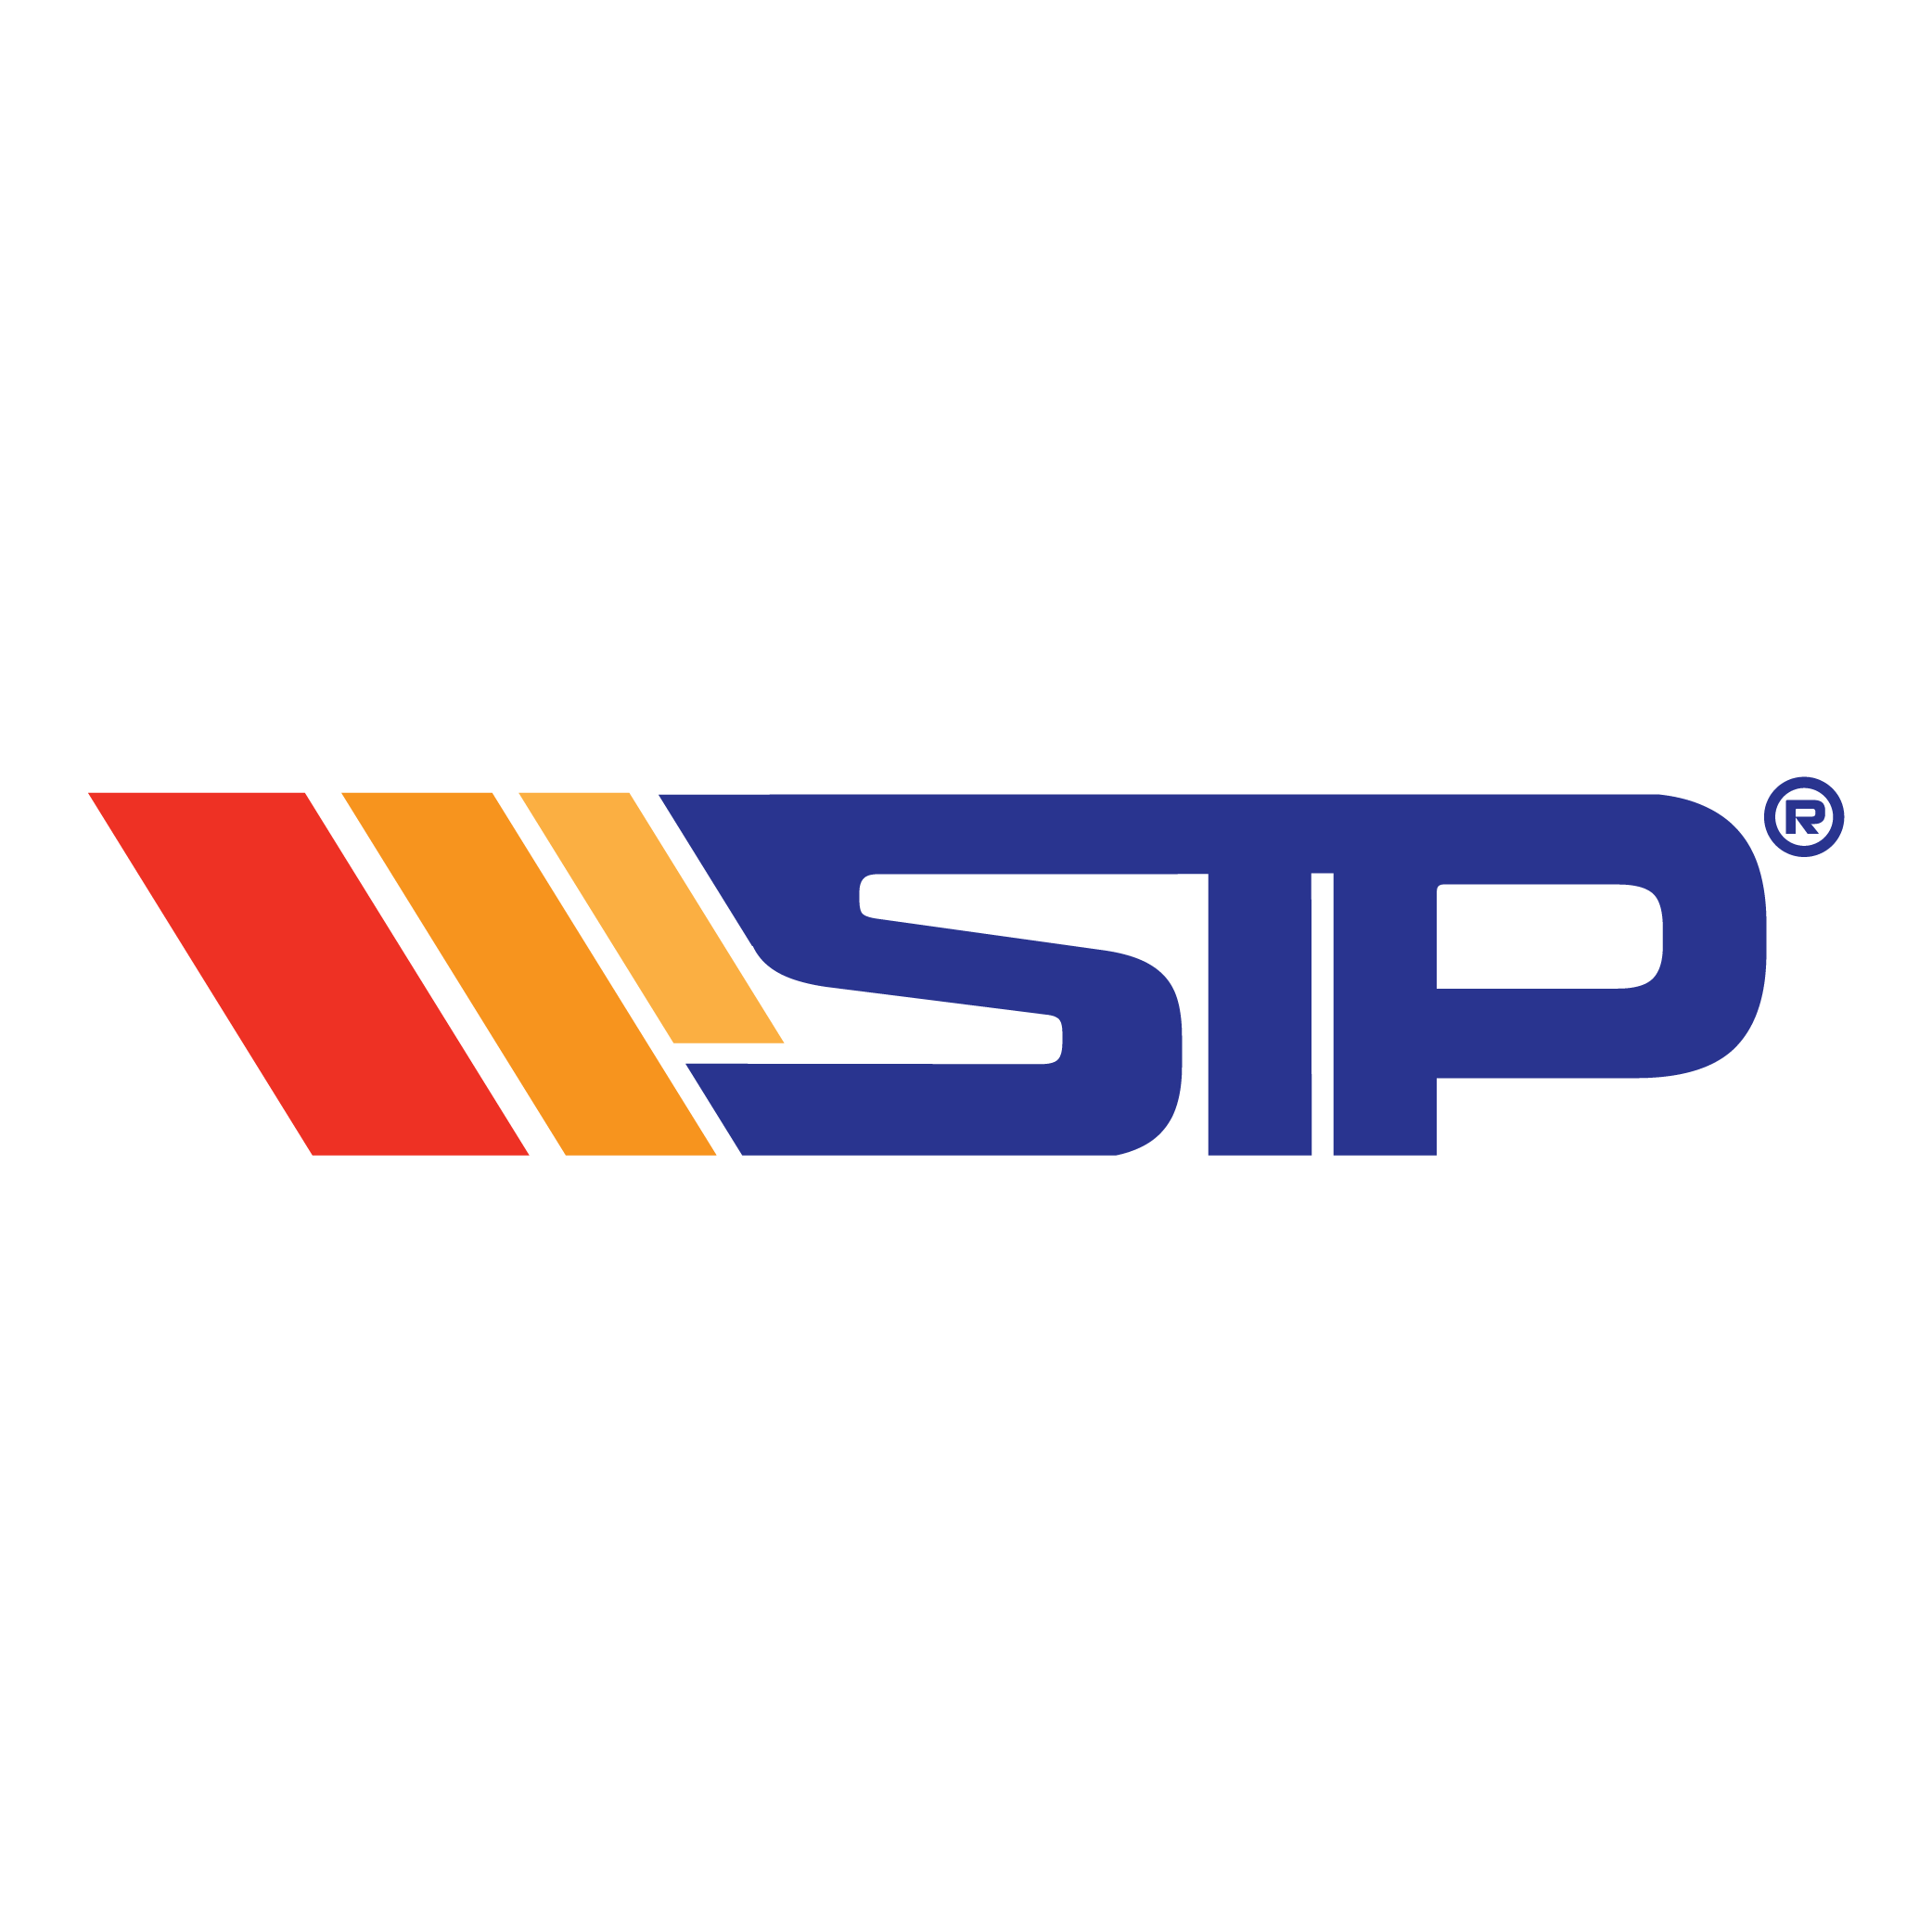 STP logo-07.png